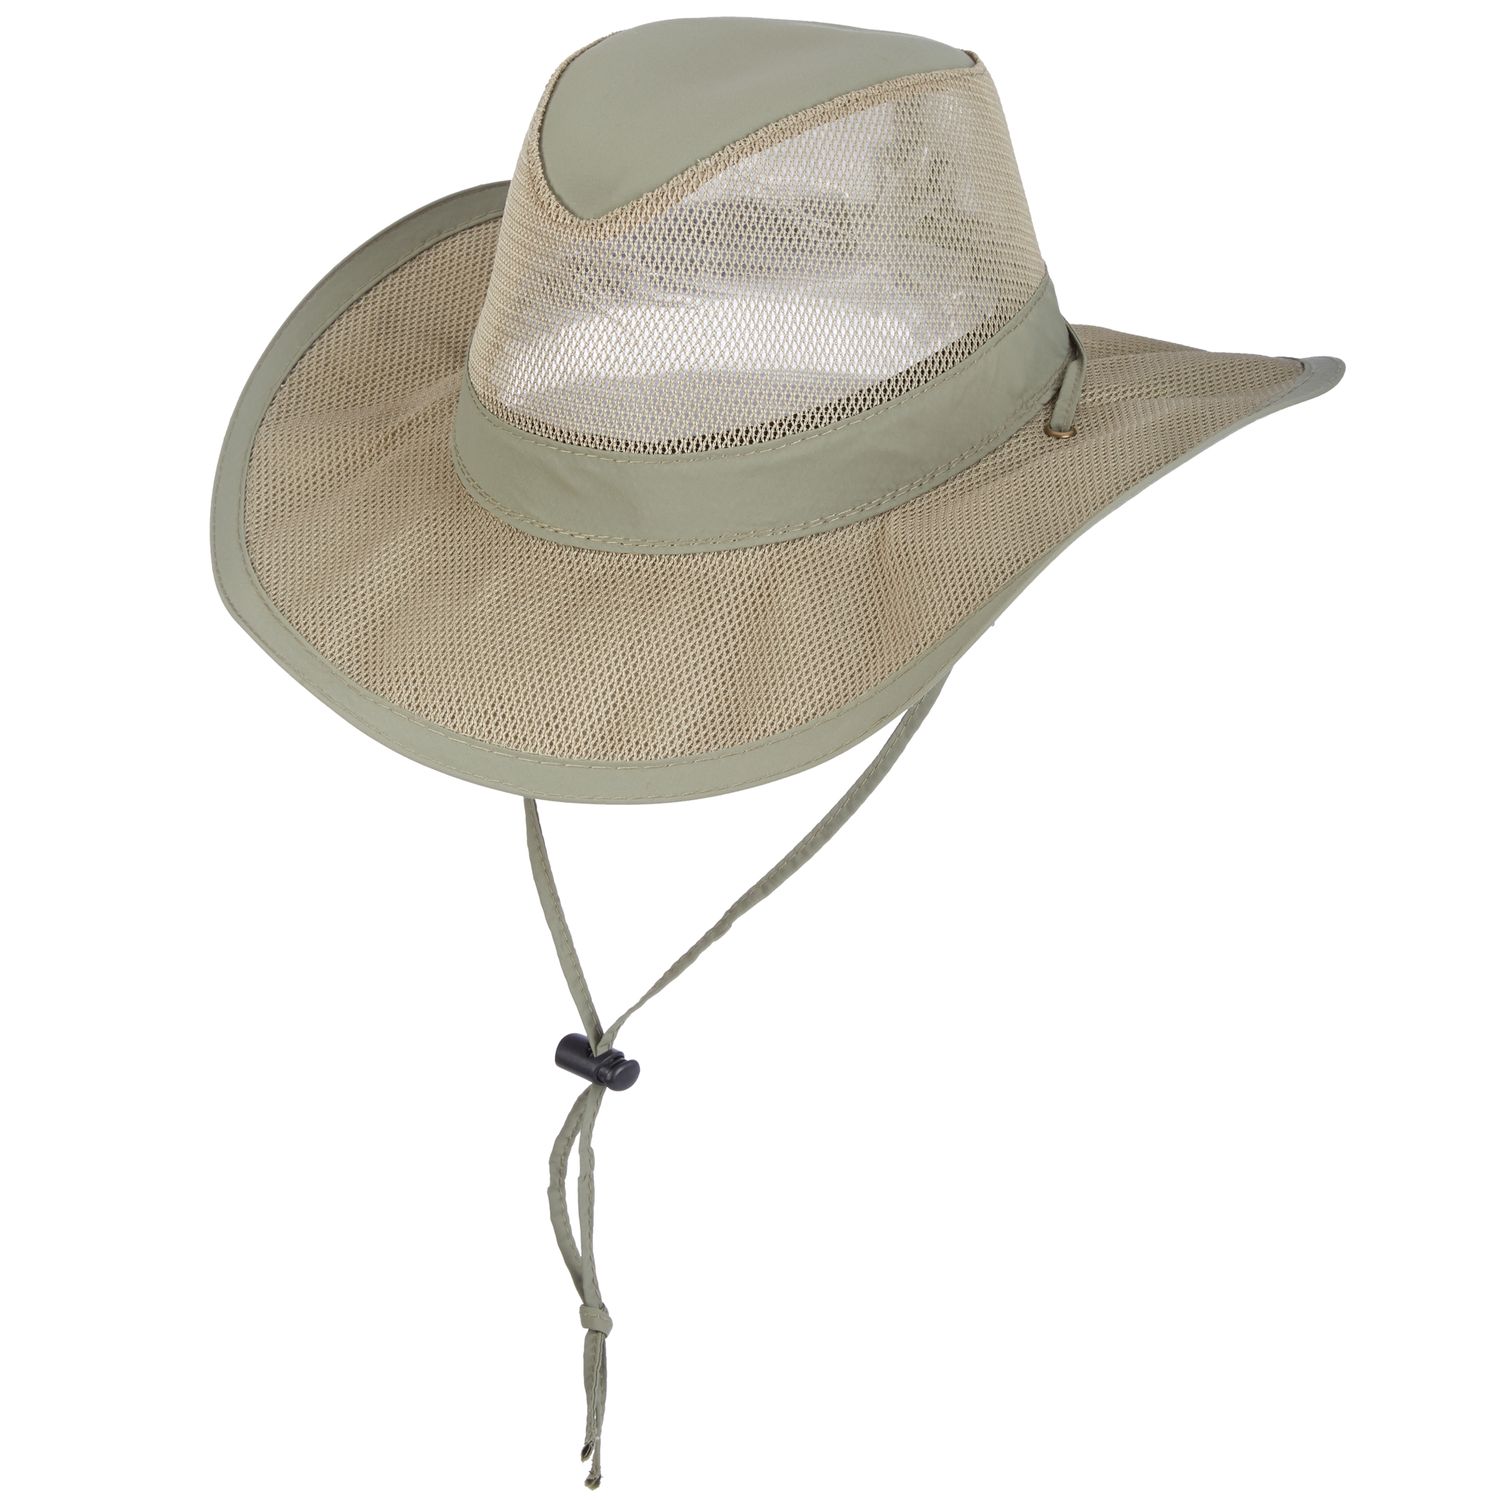 Image for DPC Men's Supplex Safari Hat at Kohl's.